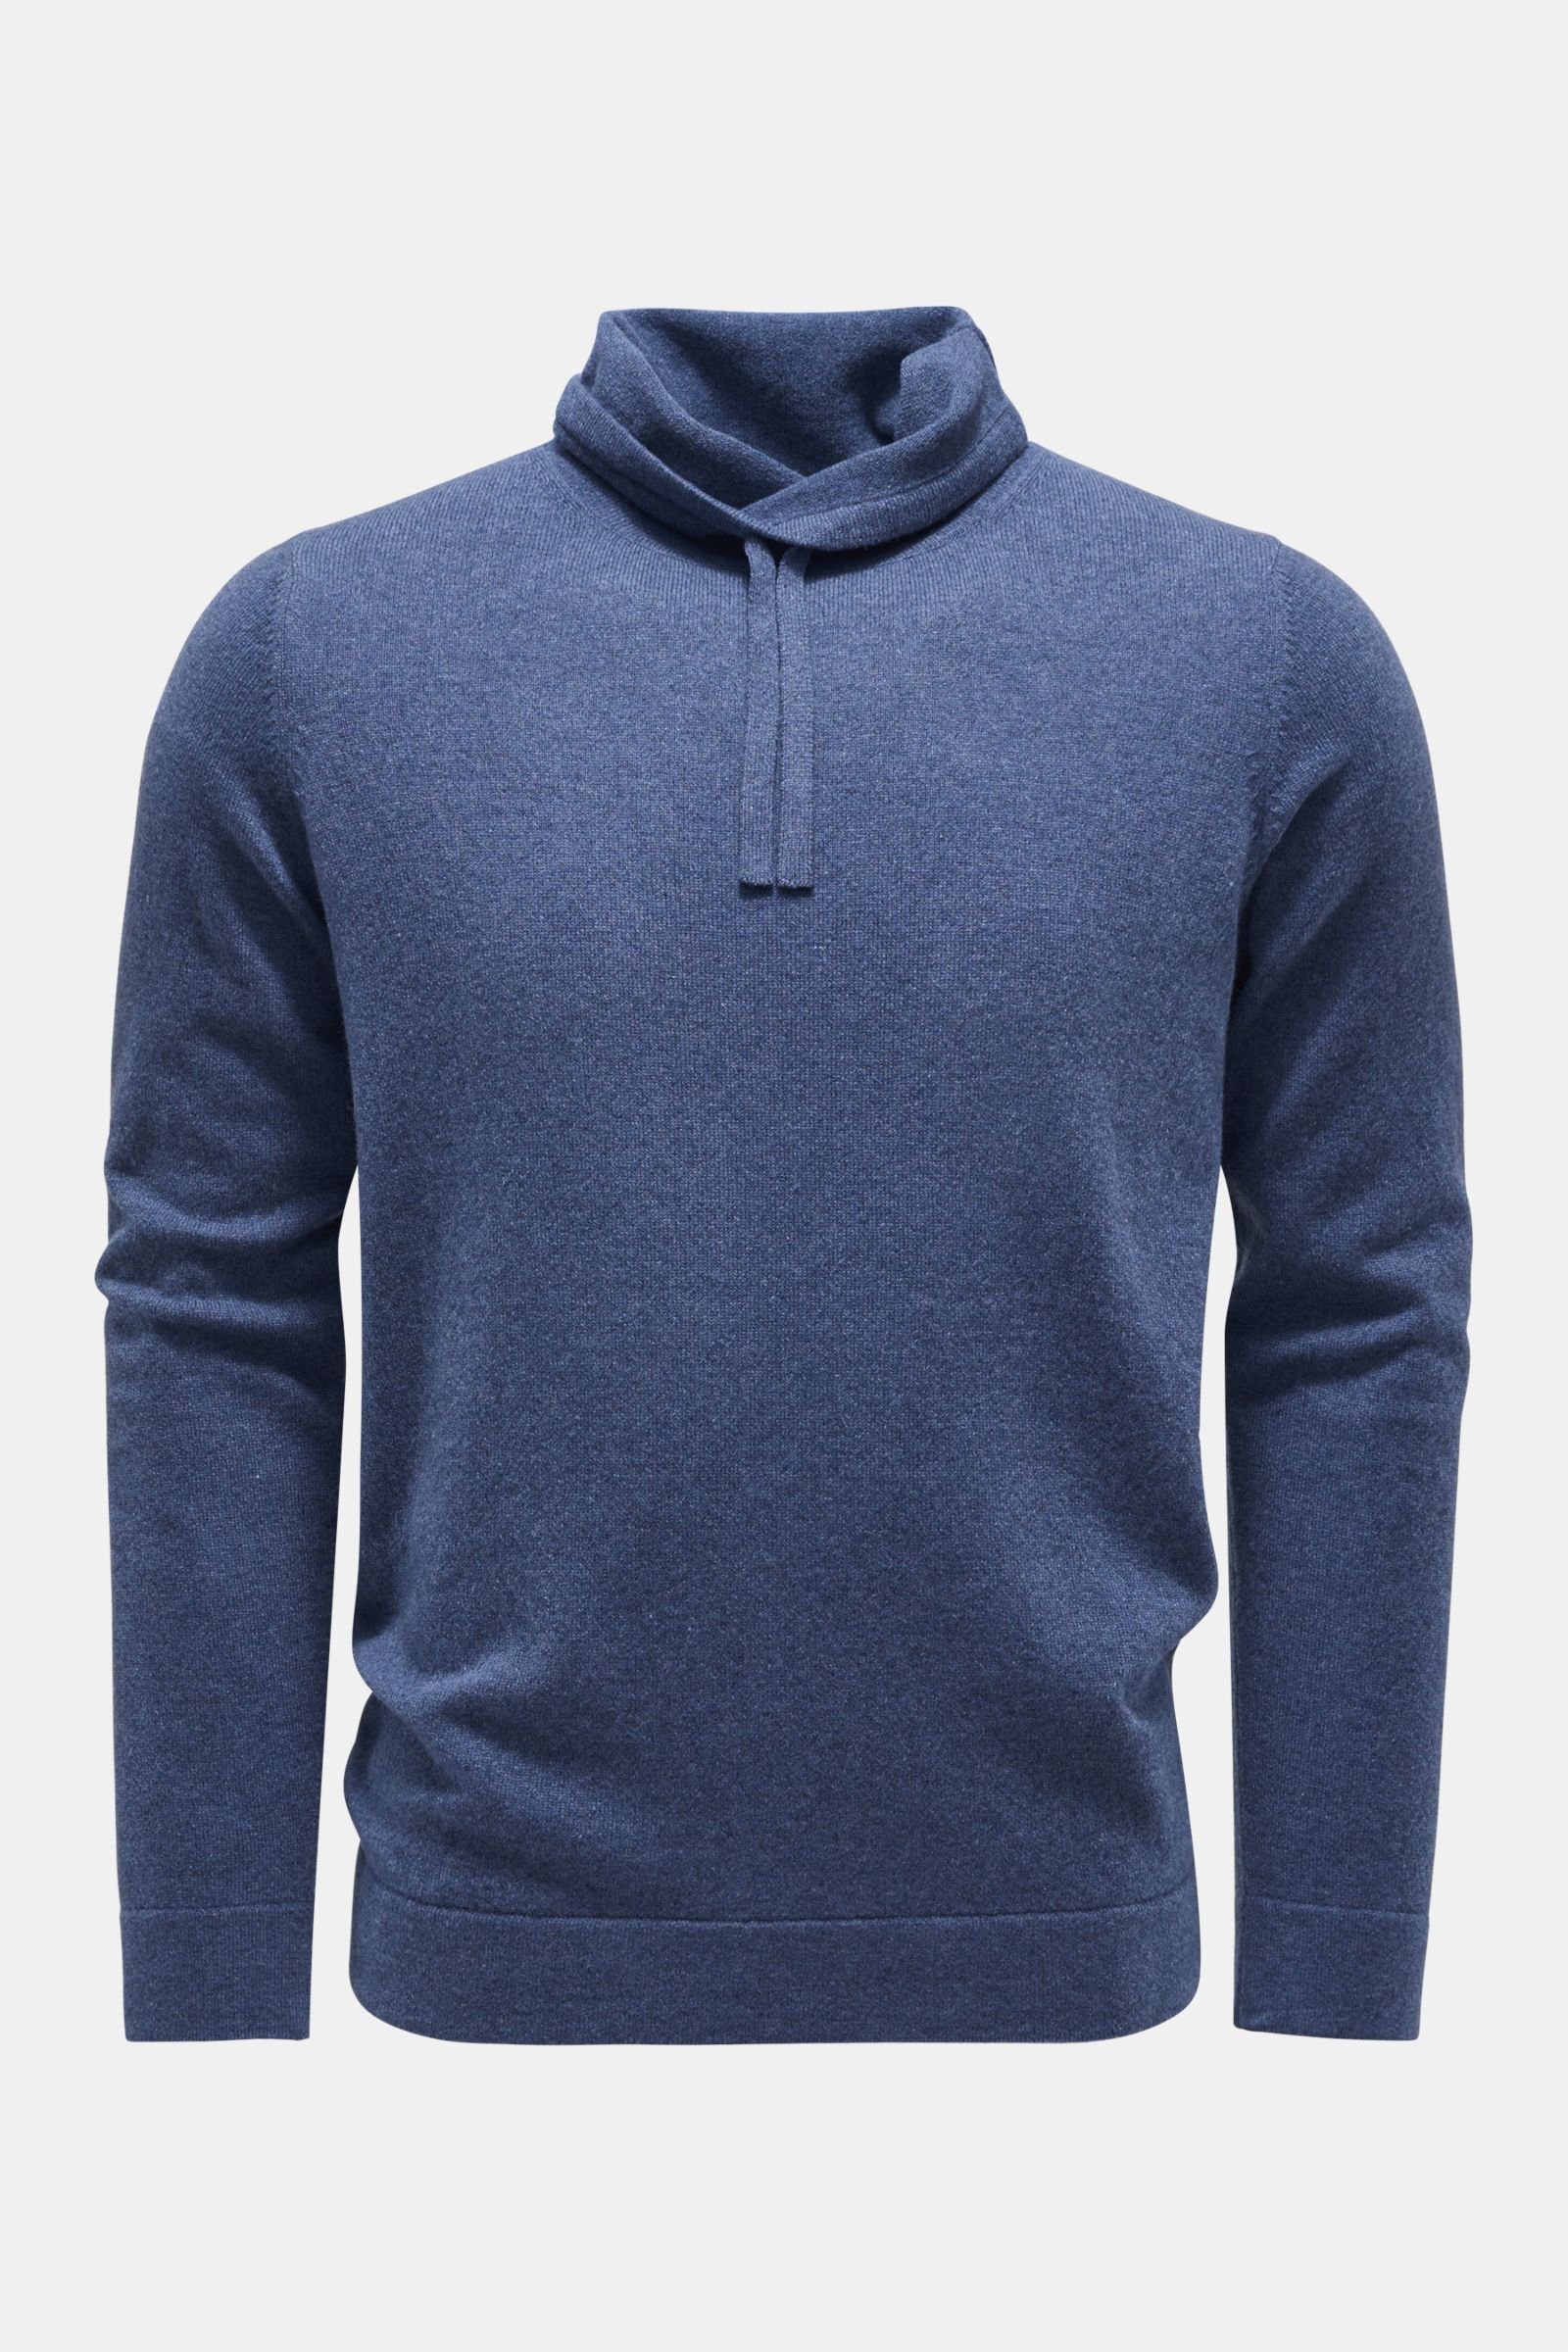 Cashmere jumper grey-blue